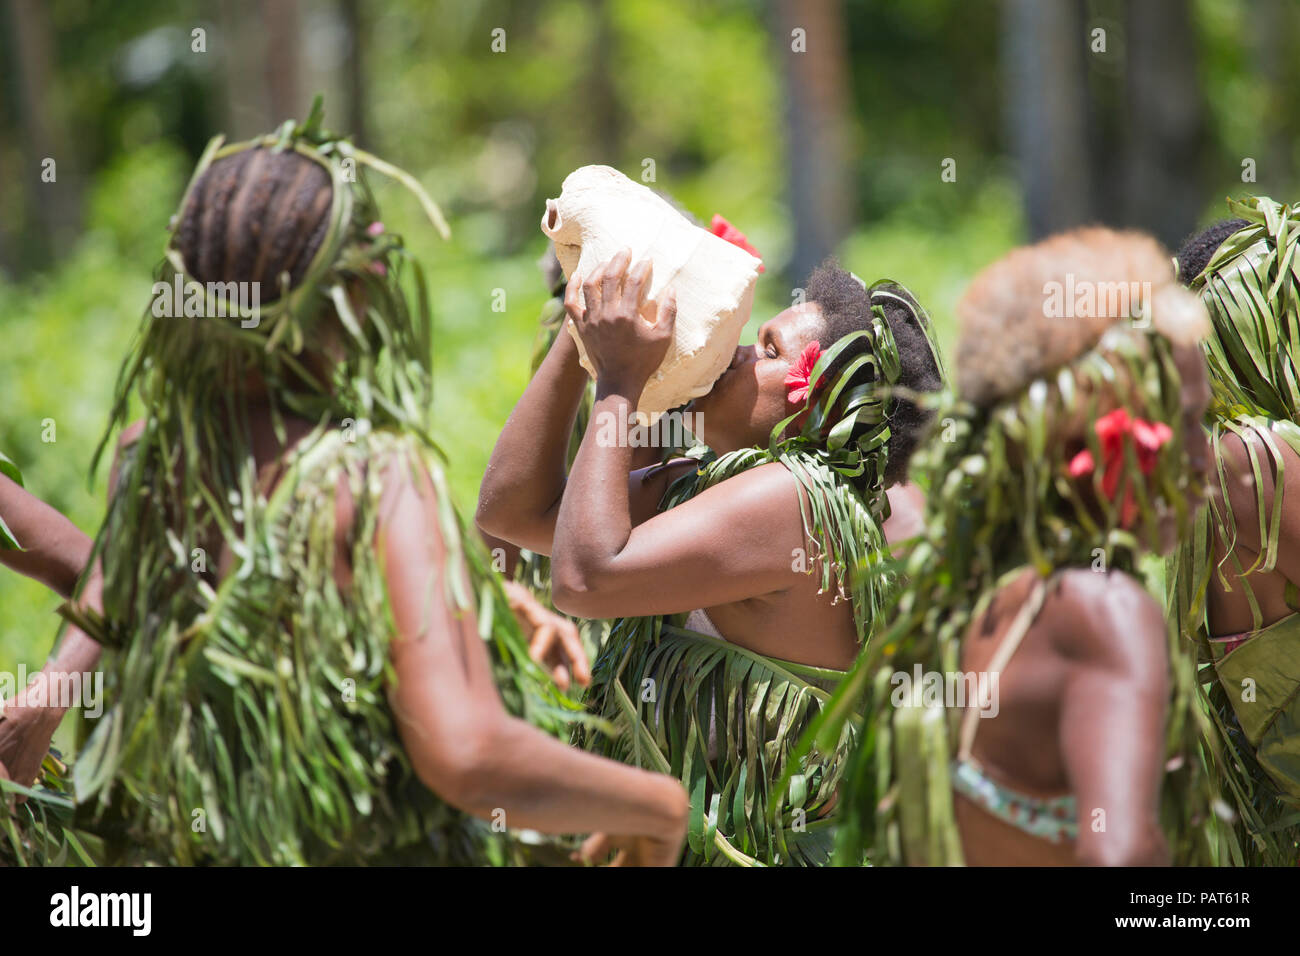 Îles Salomon, Makira-Ulawa Province, Owaraha alias Santa Ana, performances culturelles, femme jouant de la conque shell. Banque D'Images